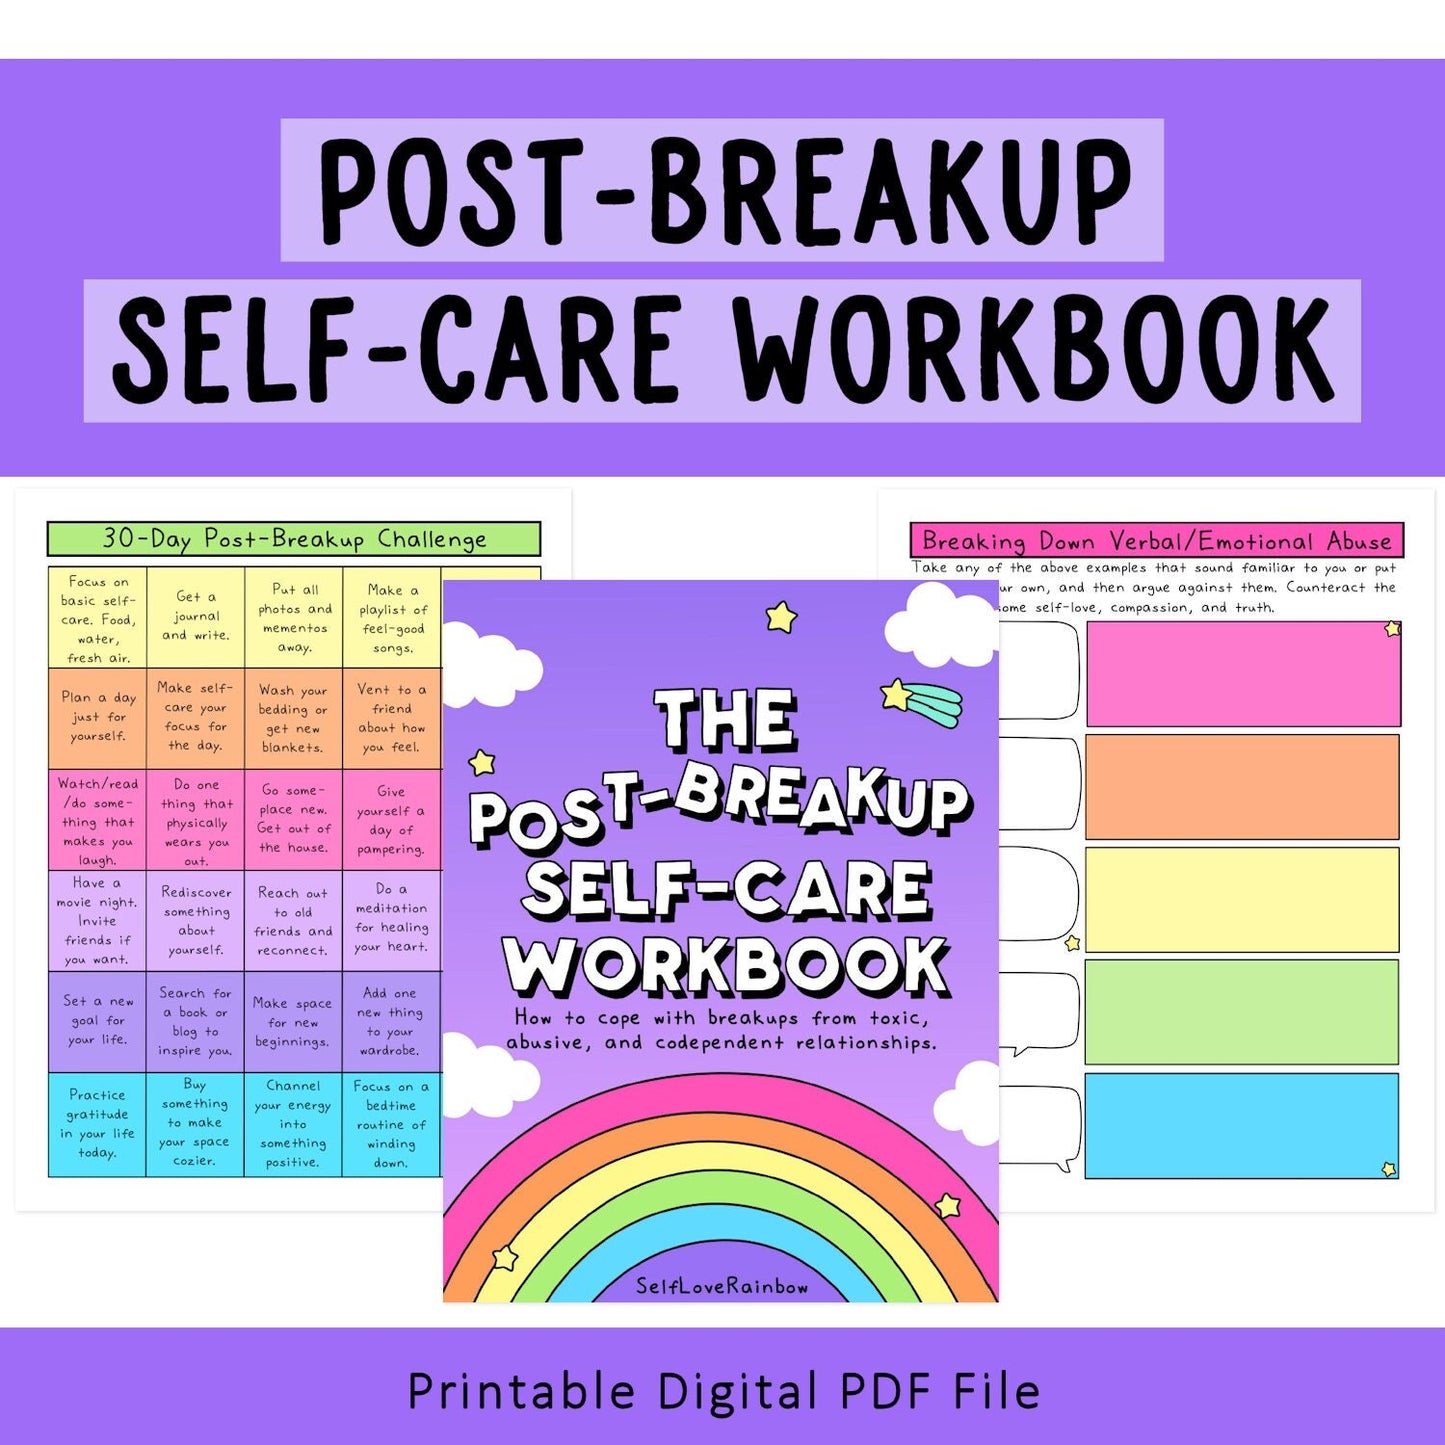 Post-Breakup Self-Care Workbook